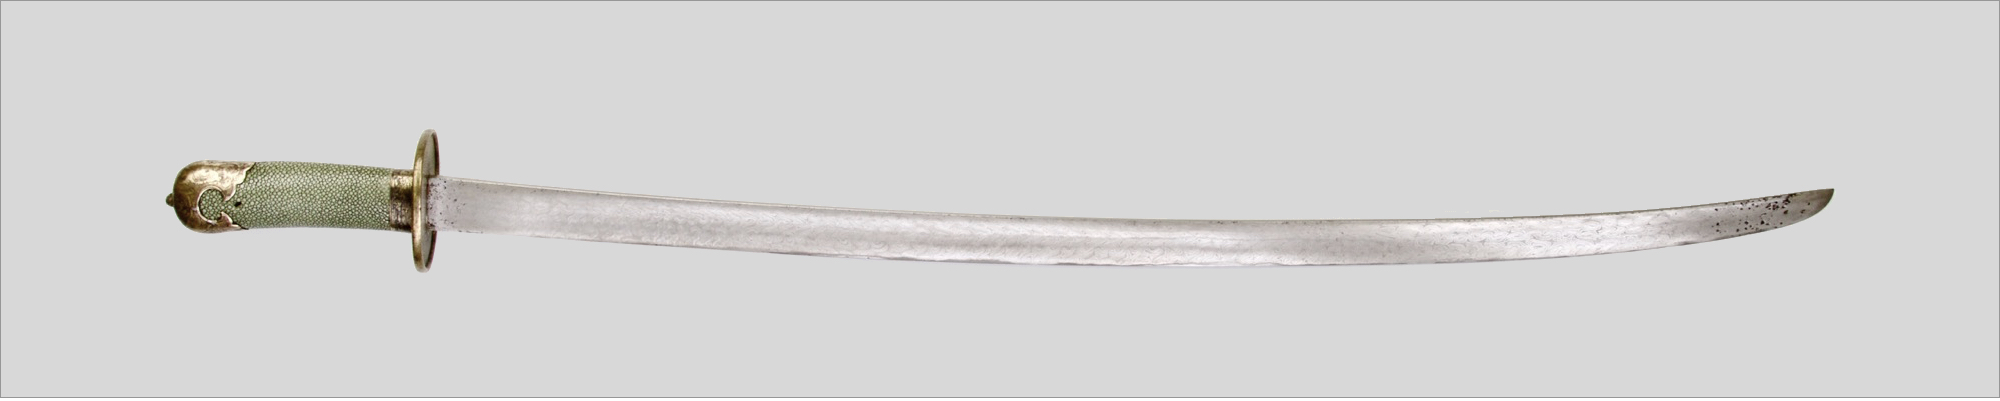 Antique Chinese saber with huawengang blade